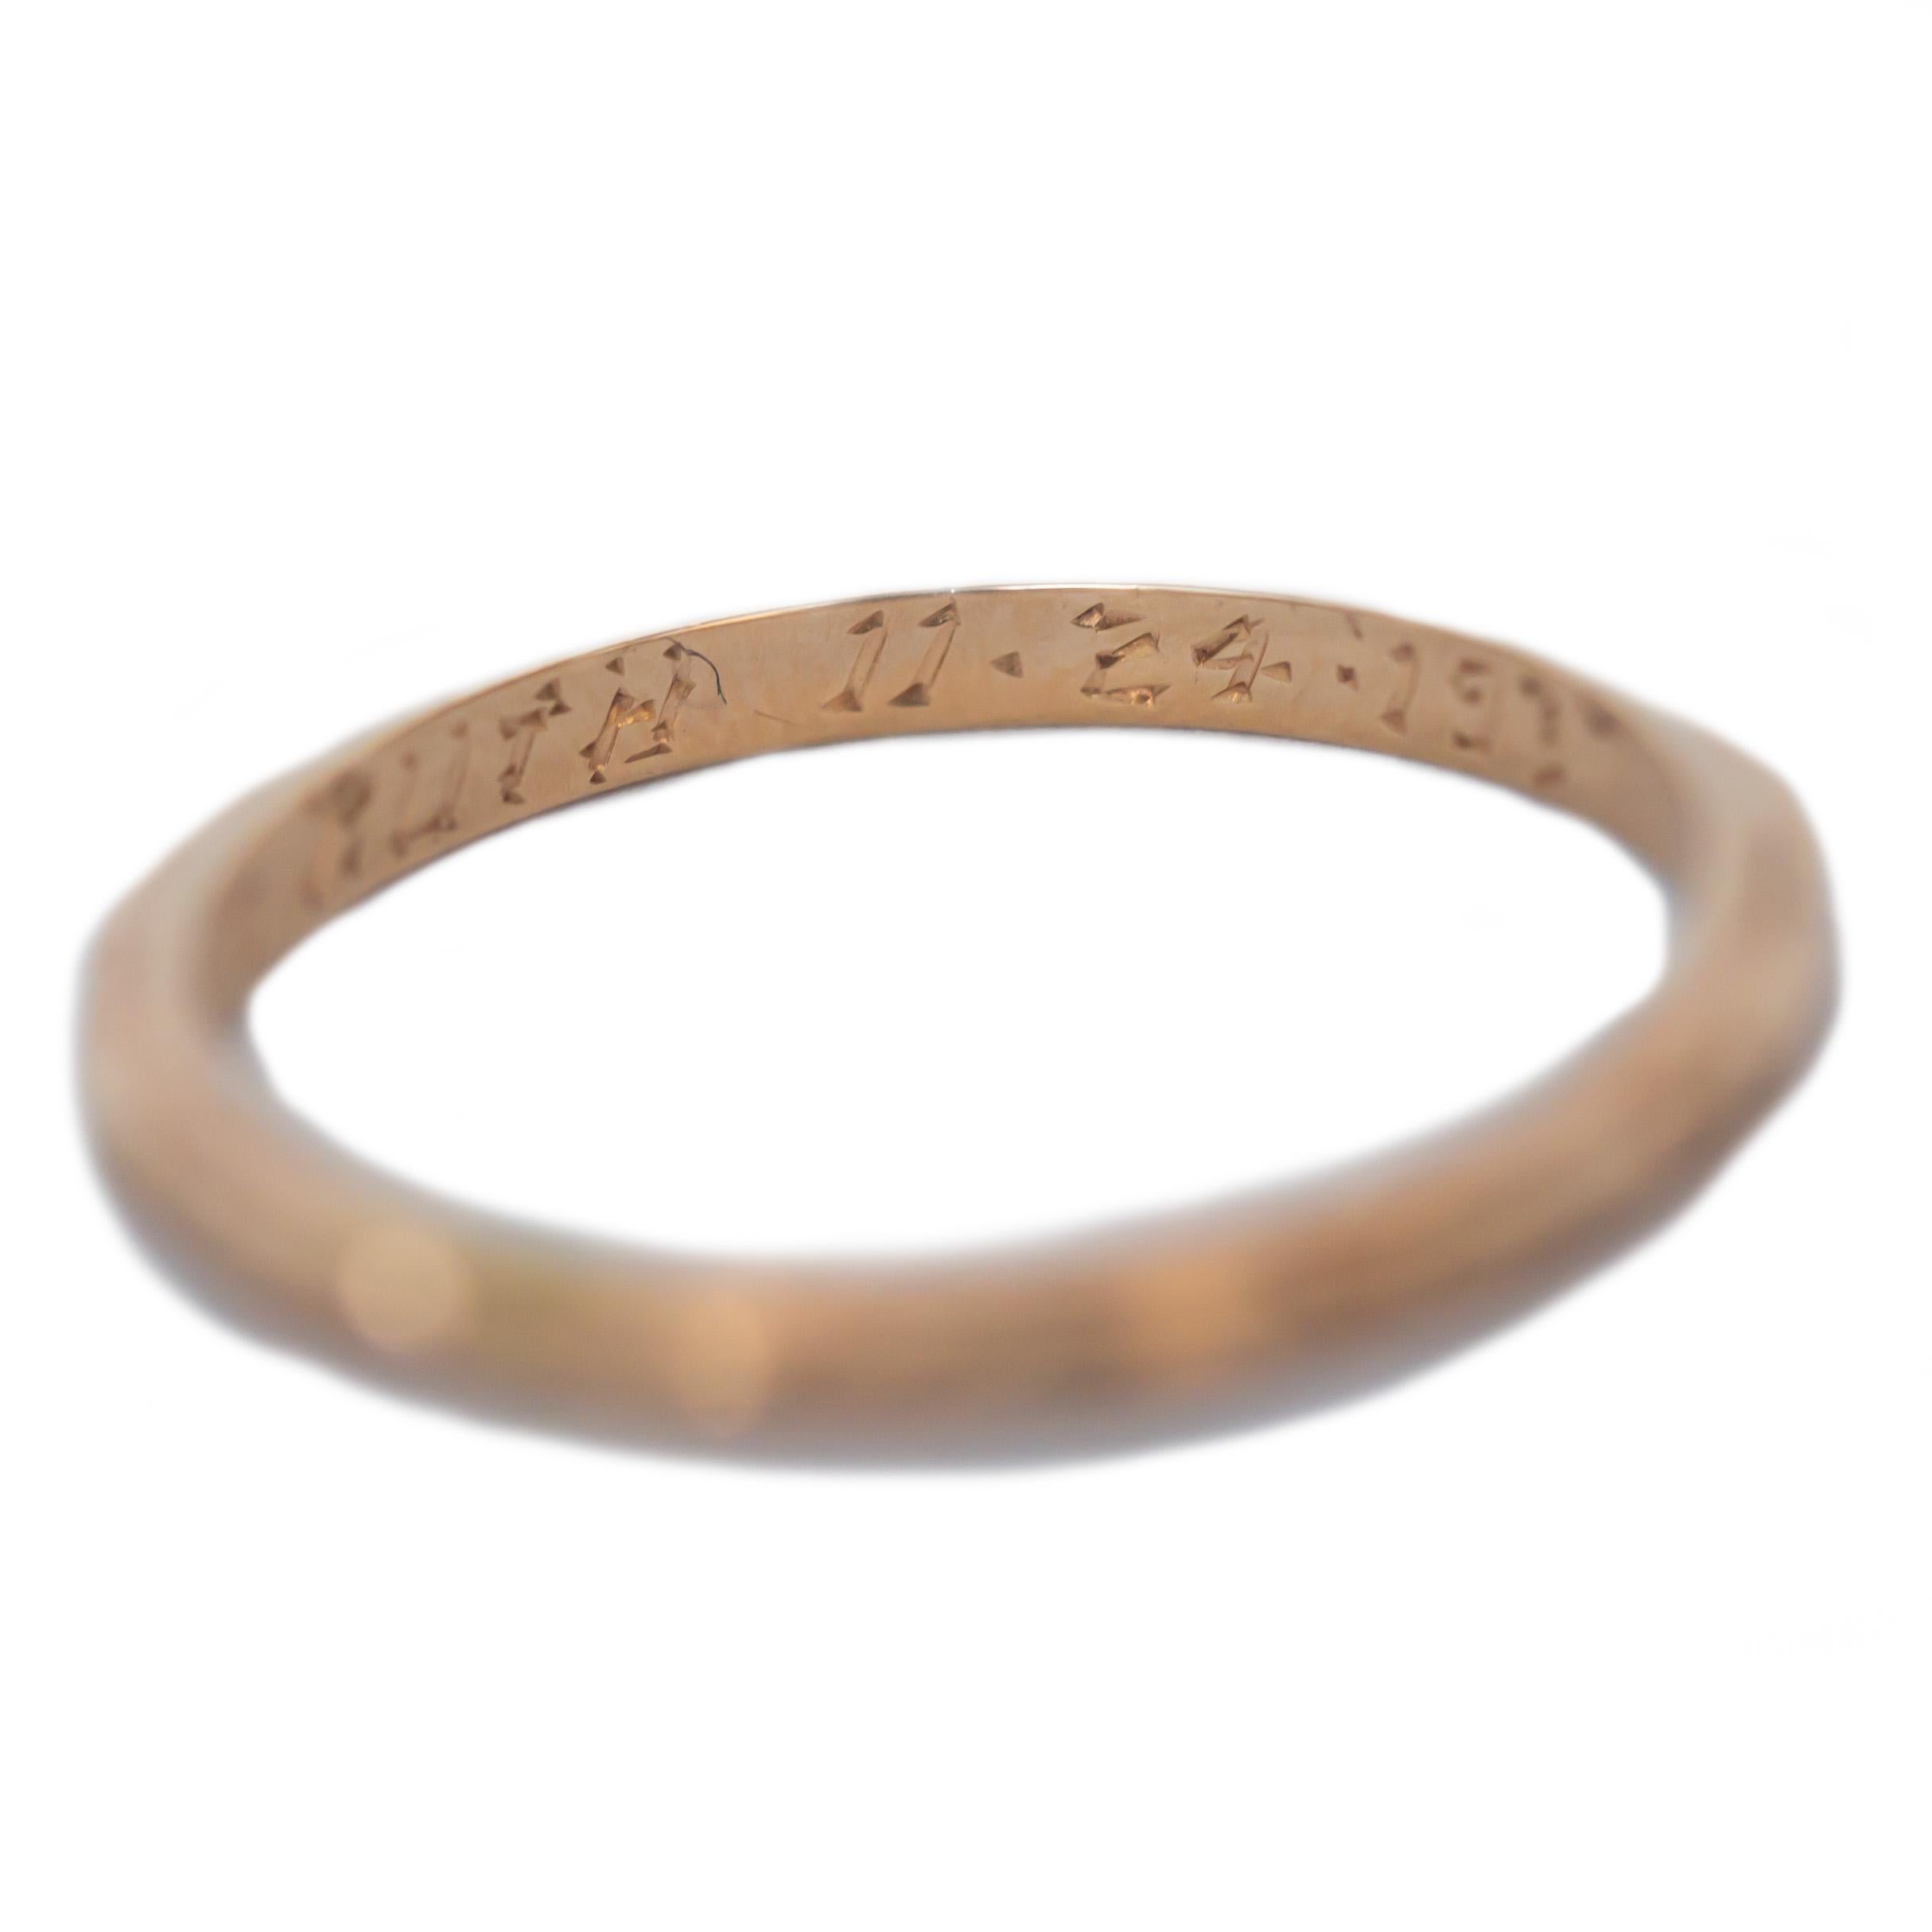 Ring Size: 4.95
Metal Type: 14 karat Rose Gold 
Weight: 1.3 grams

Finger to Top of Stone Measurement: 1.55mm
Width: 1.85mm
